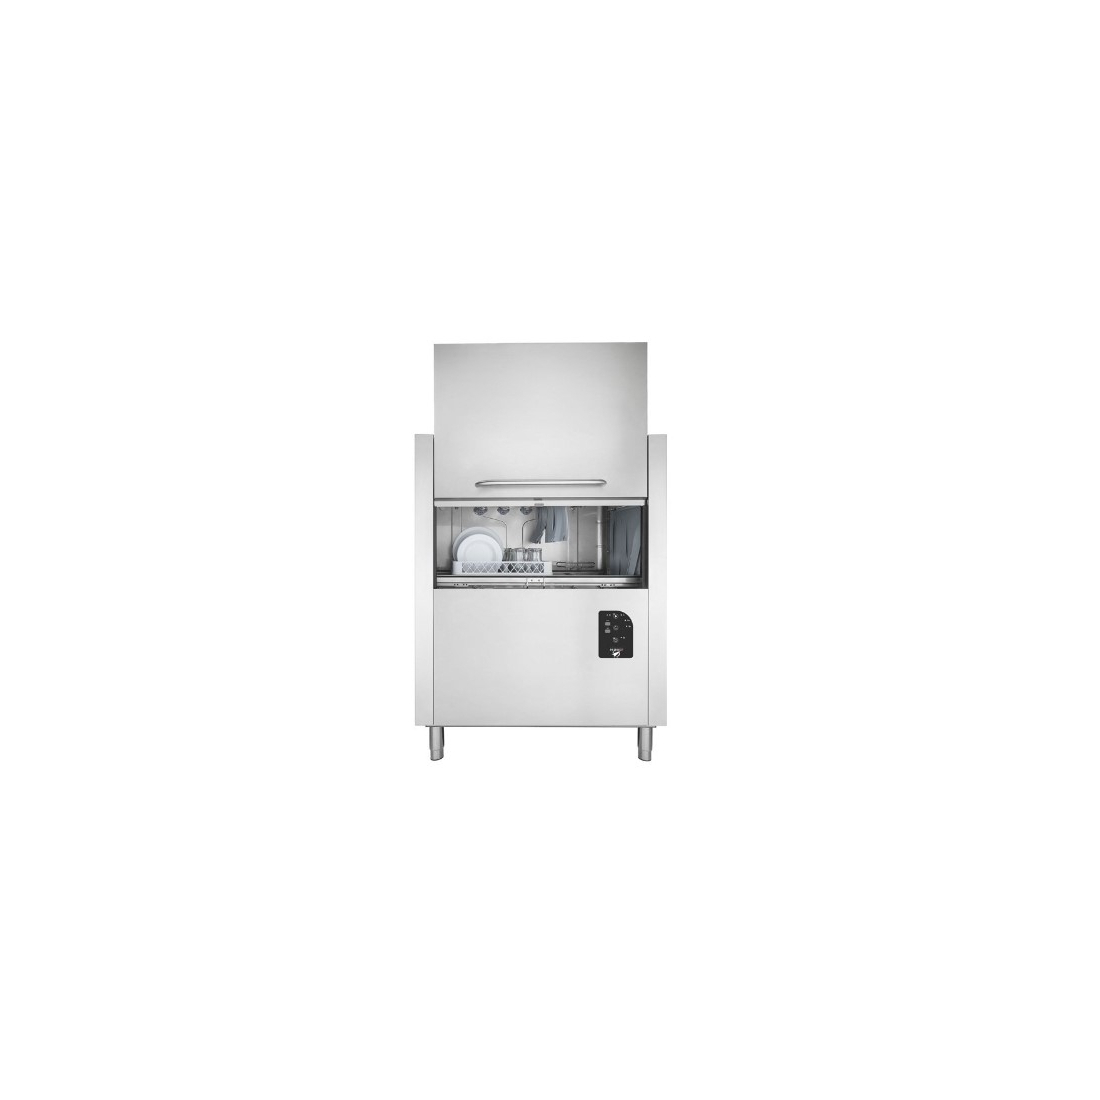 SISTEMA PROJECT (CT120HZ) Rack Conveyor Dishwasher With Dryer